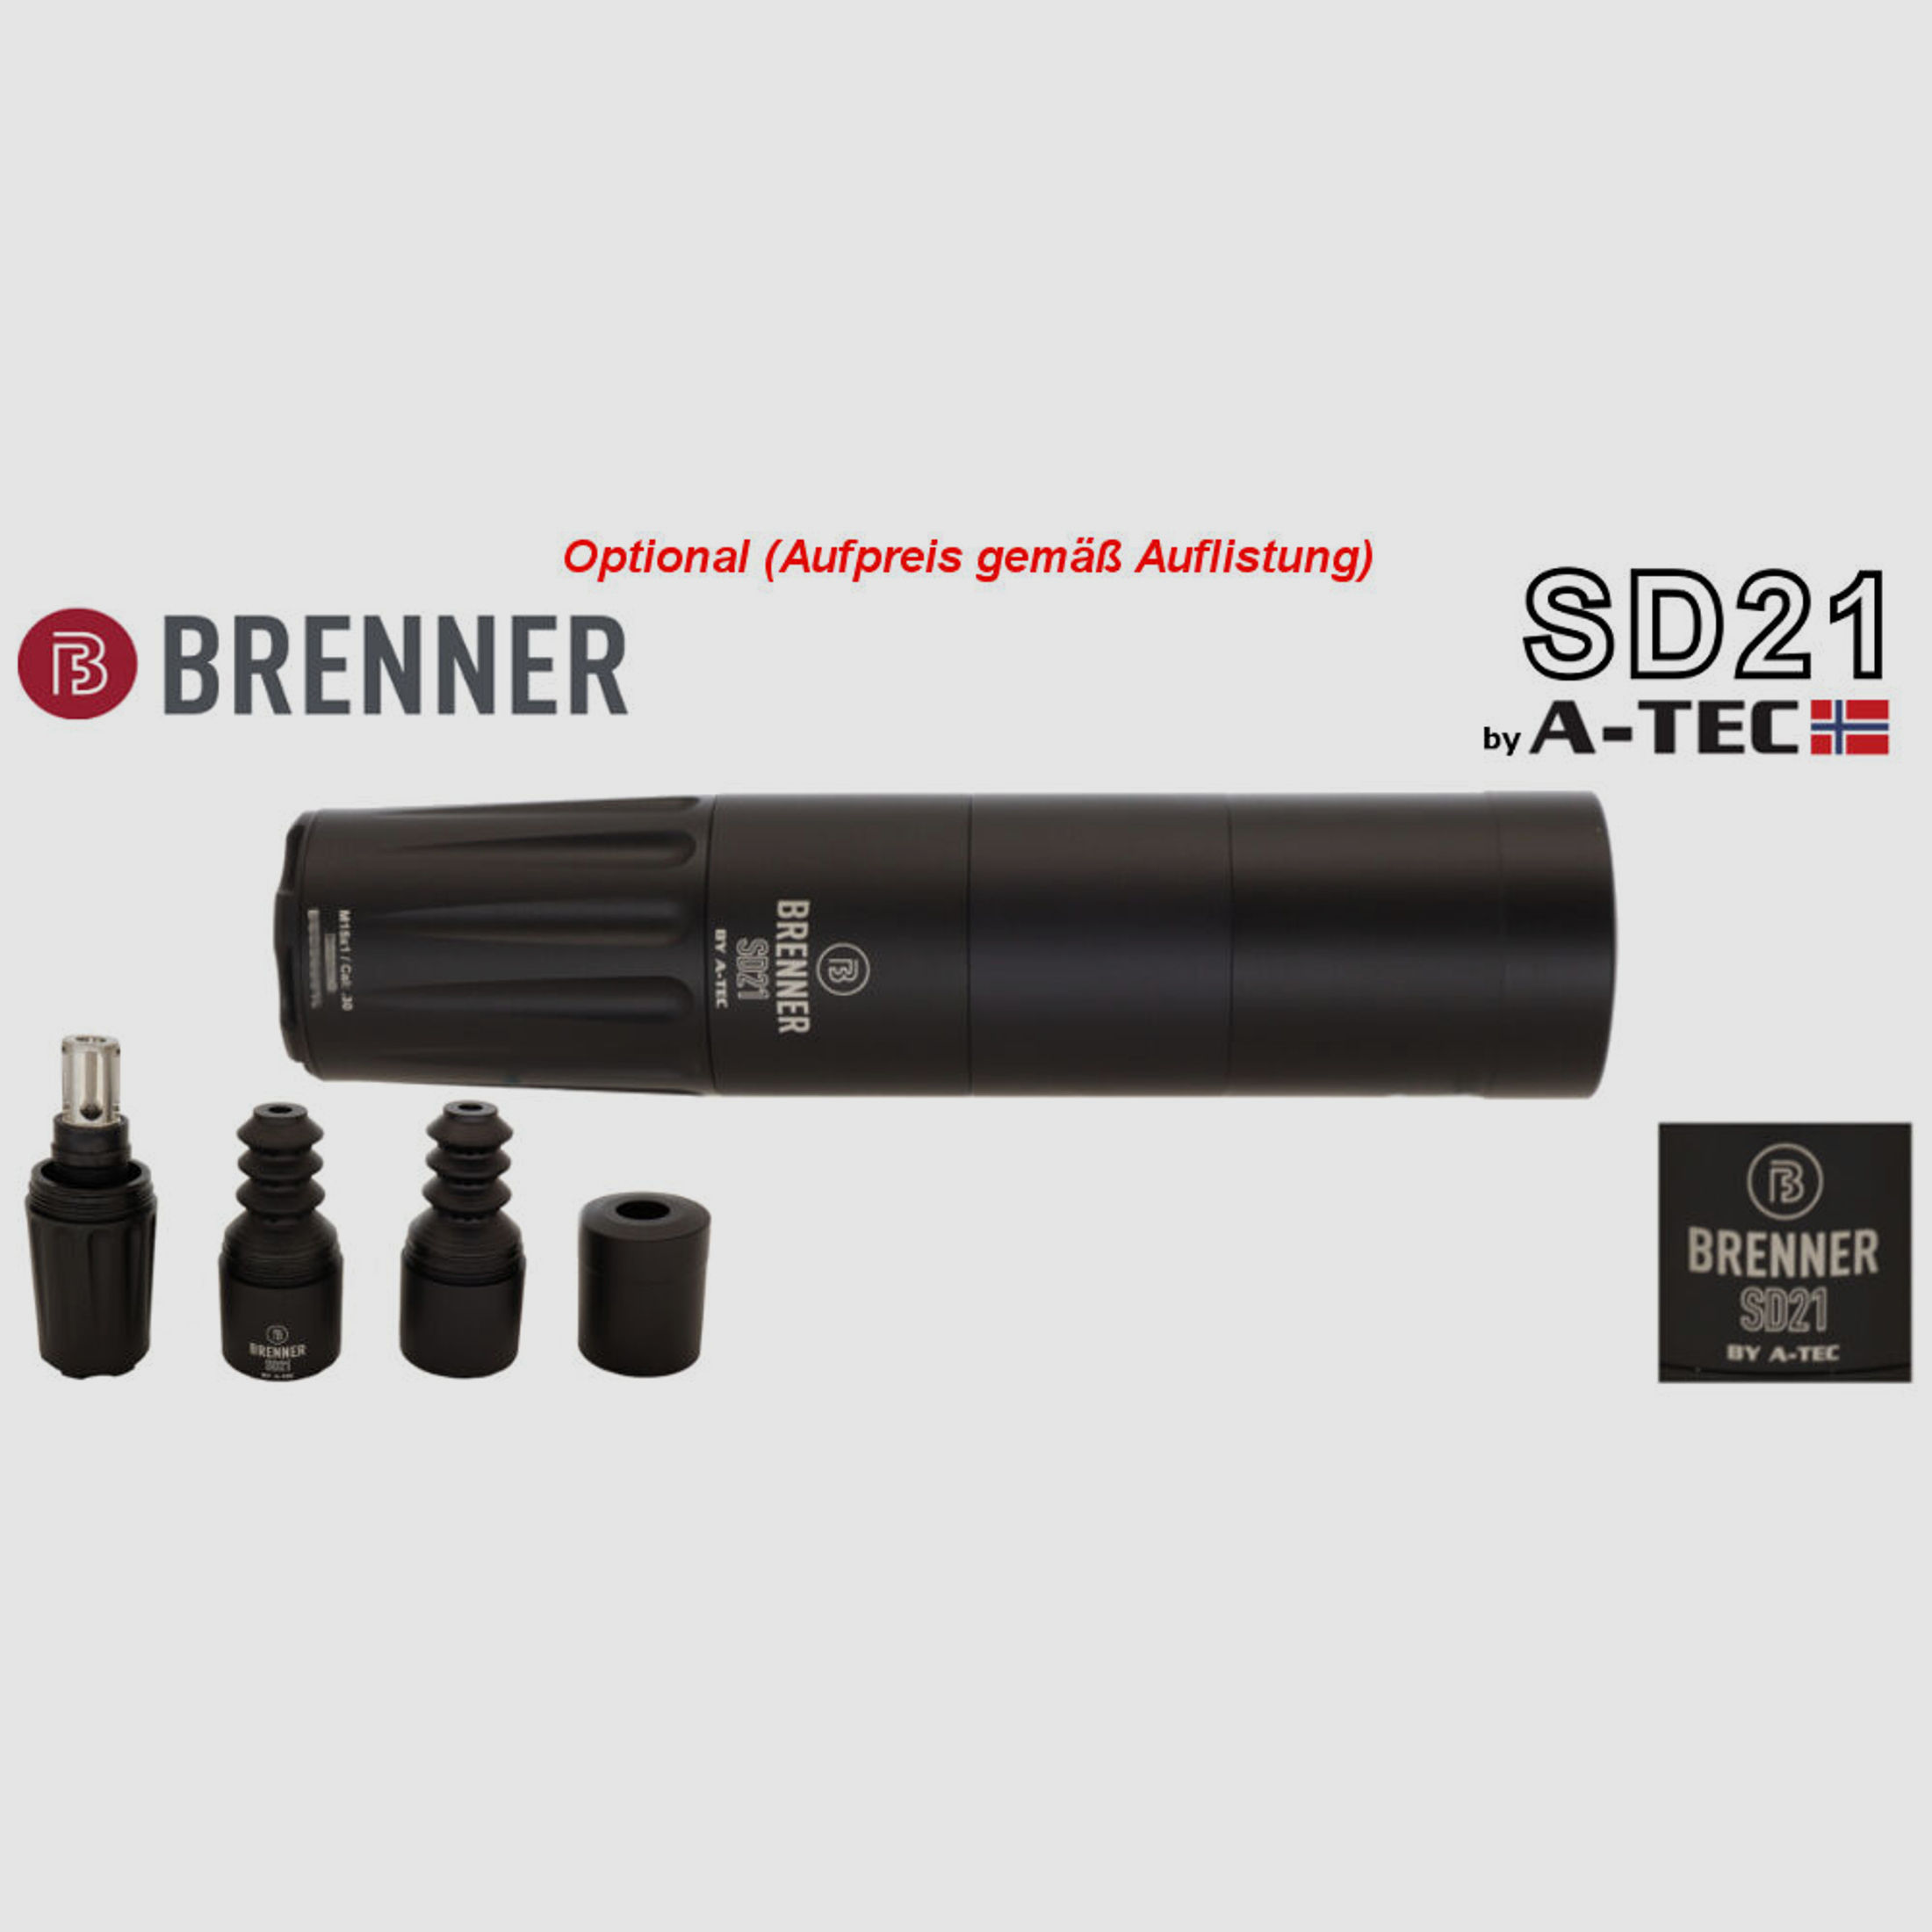 Bergara	 B14 B&H Prohunter LINKS Lochschaft mit Meopta 3-15x50 fertig montiert / Optional: Brenner Schalldämpfer